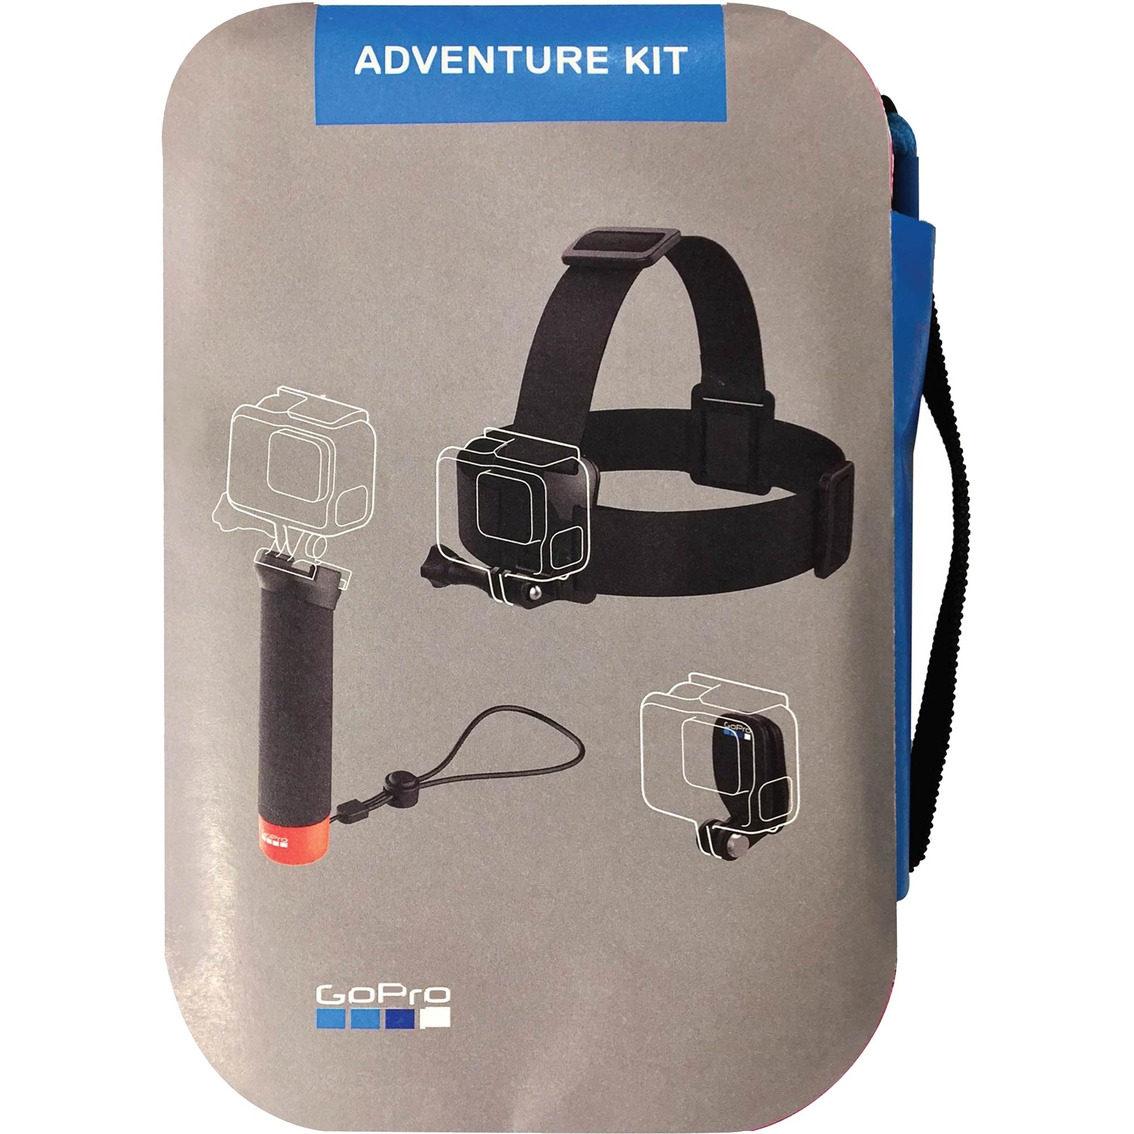 GoPro Adventure Kit - Image 2 of 2